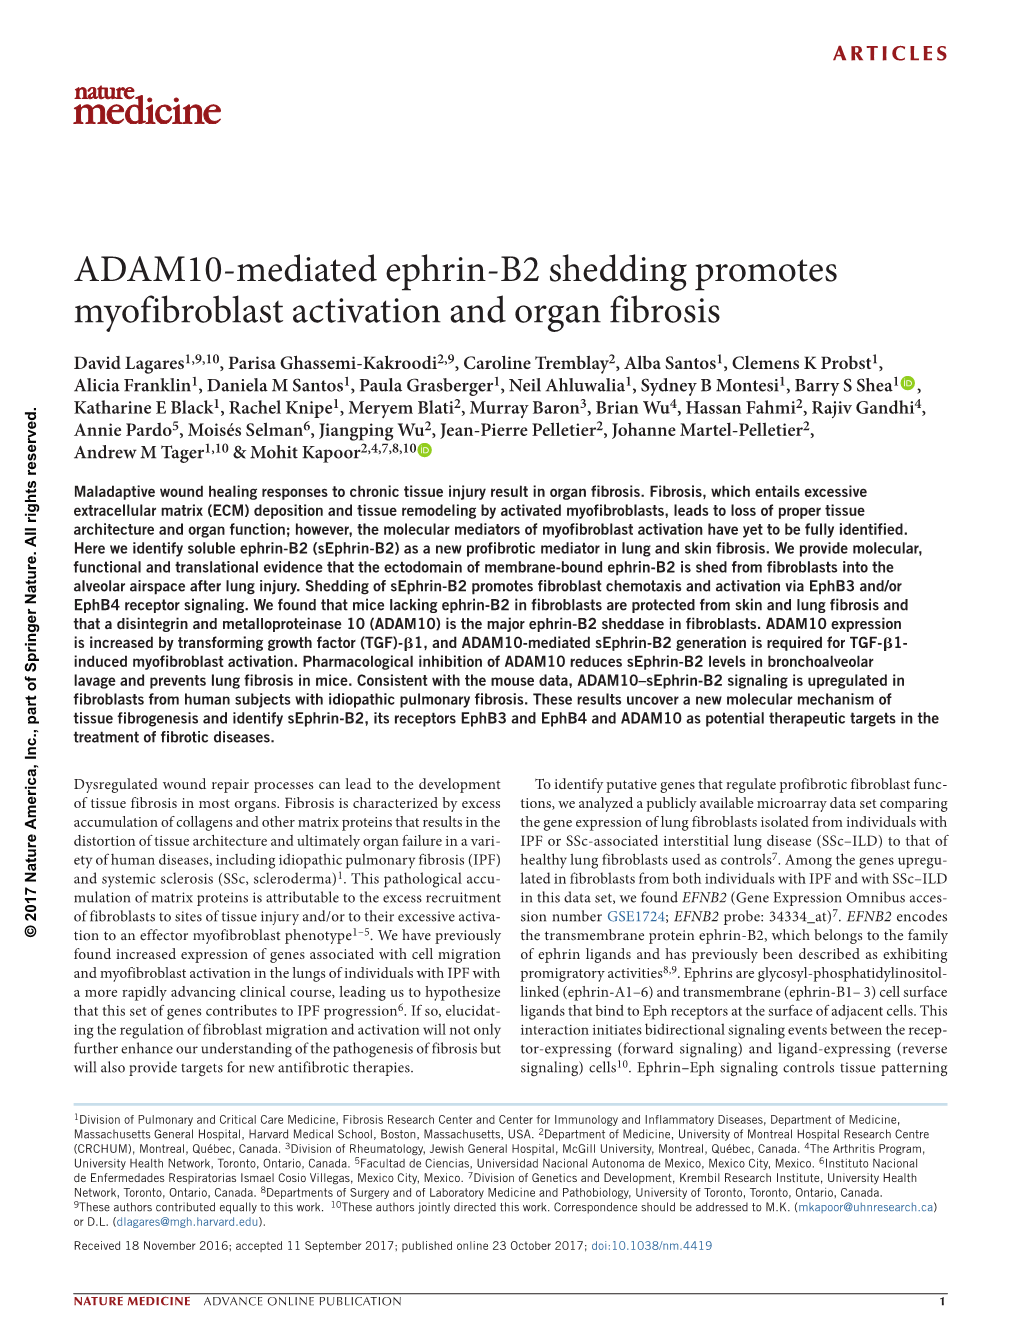 ADAM10-Mediated Ephrin-B2 Shedding Promotes Myofibroblast